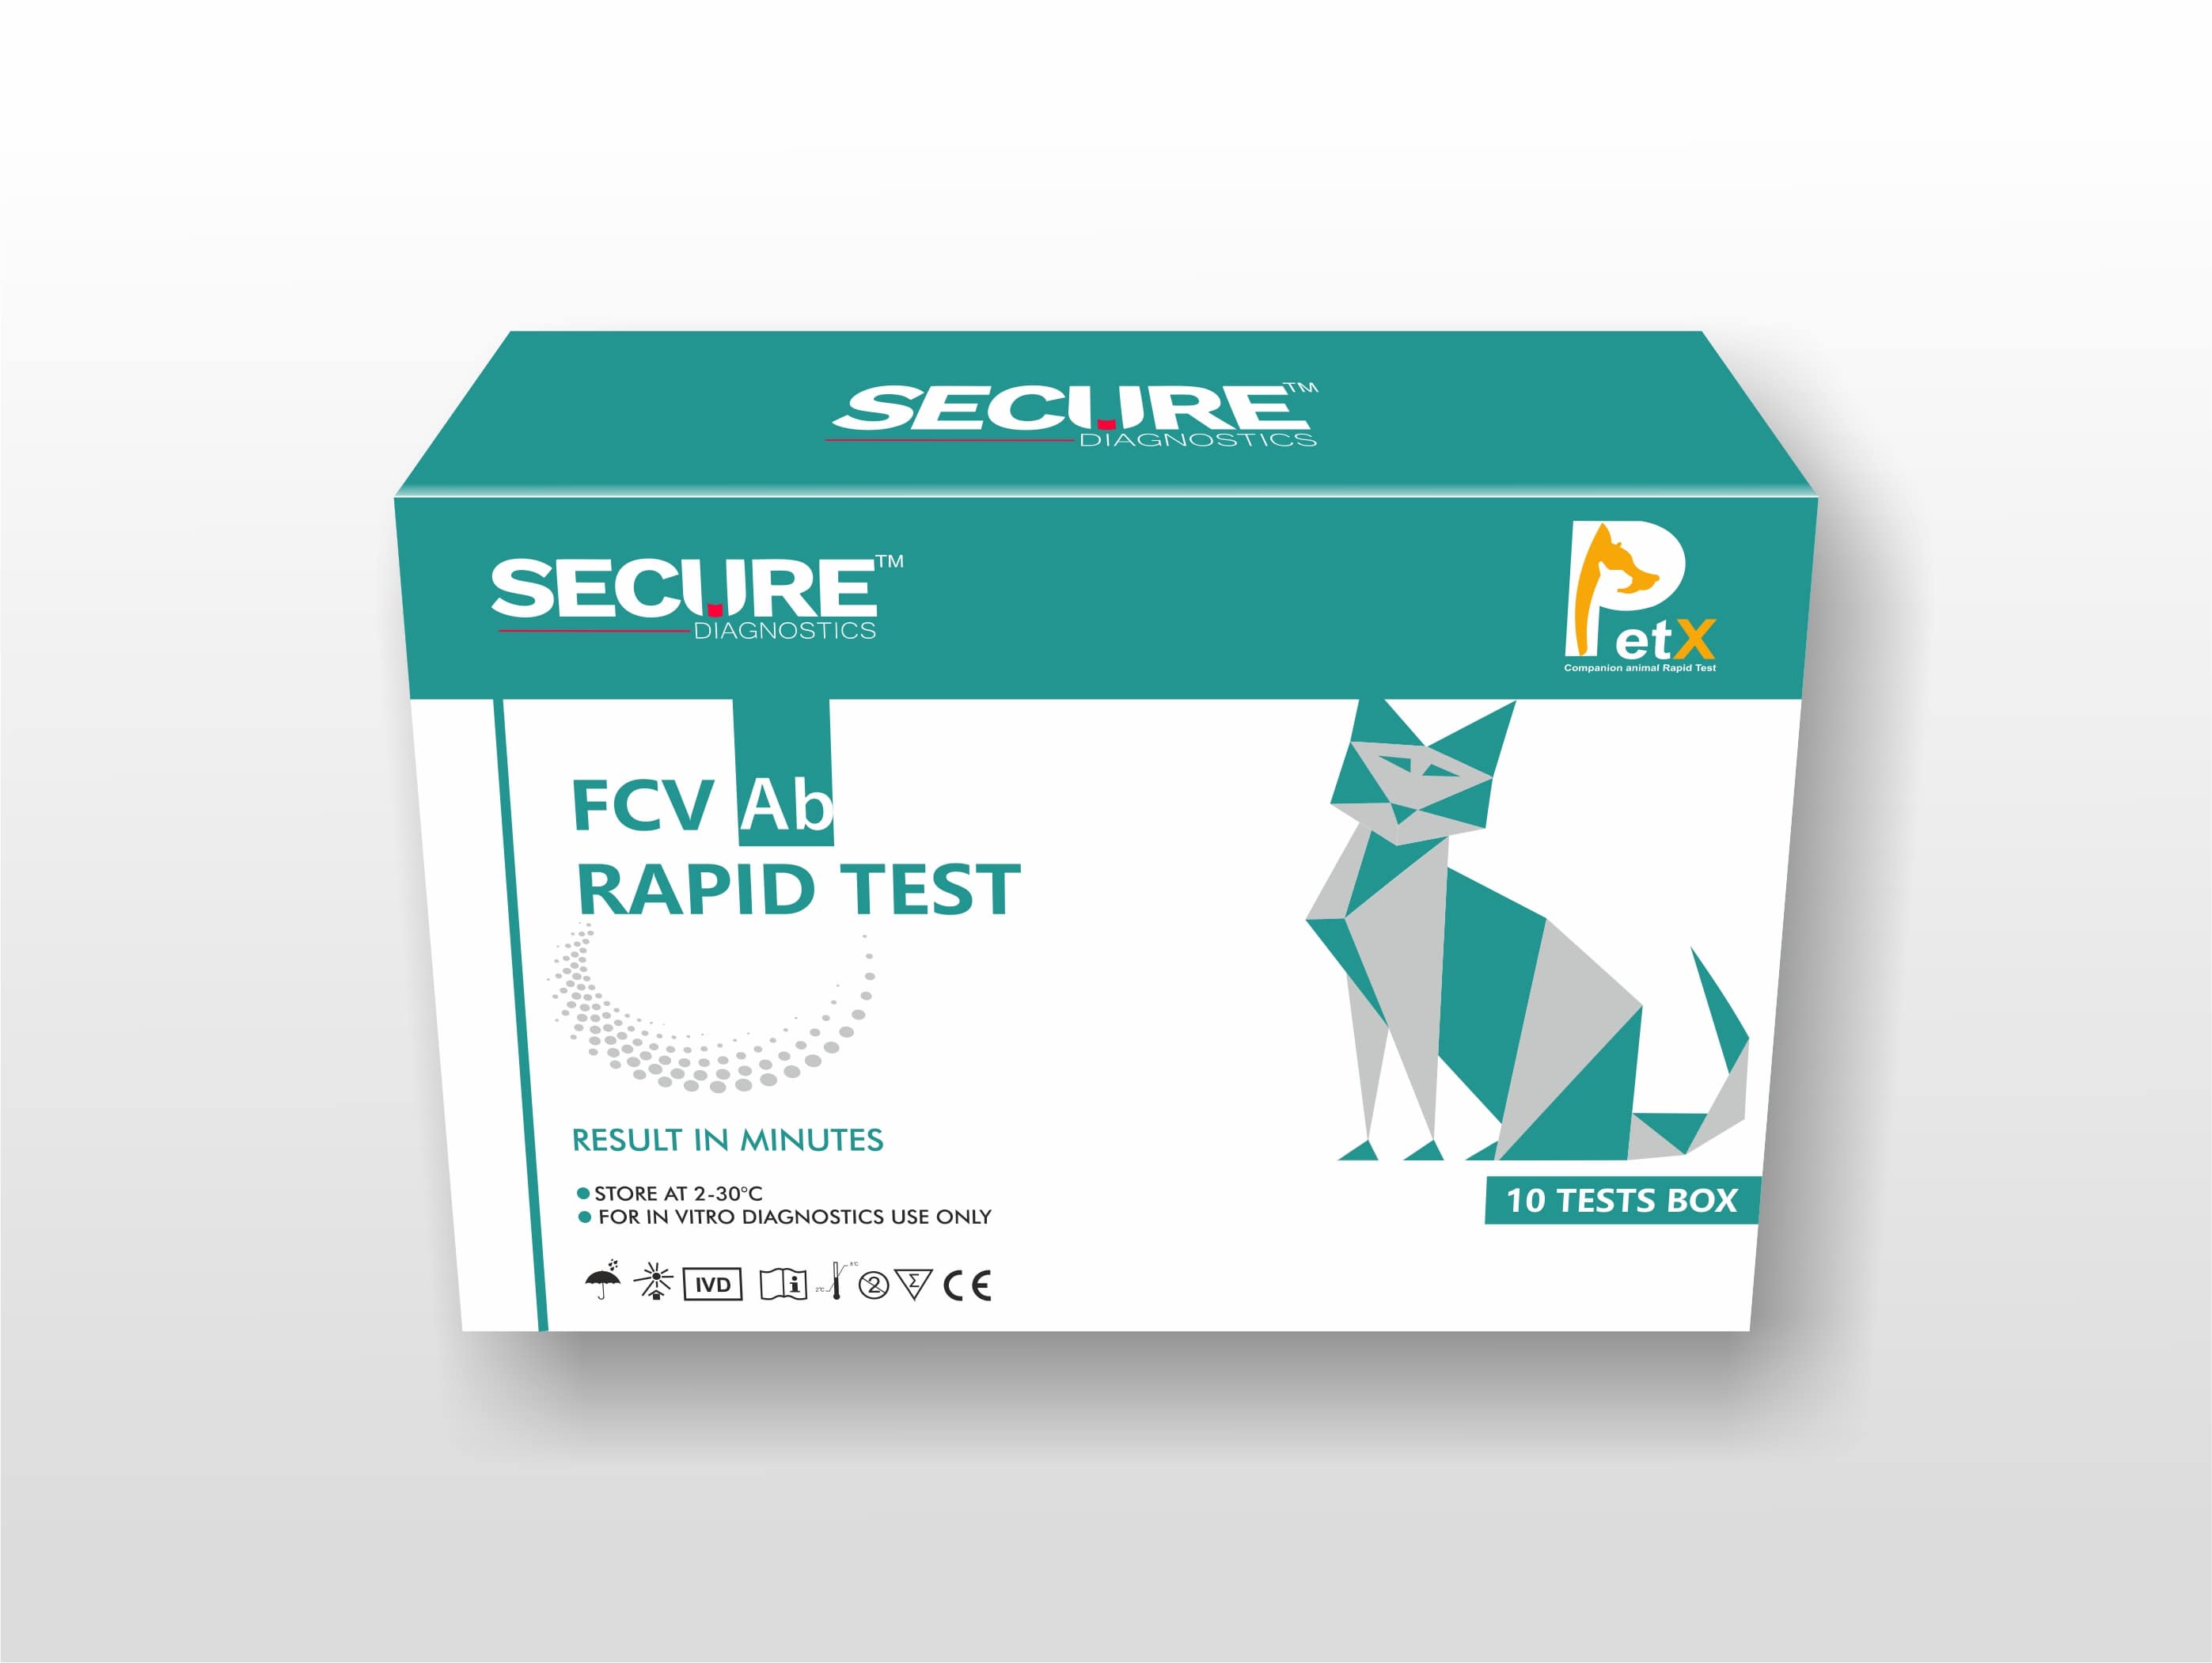 Feline Calicivirus Quantitative (fCV Ab) Antibody Test kit